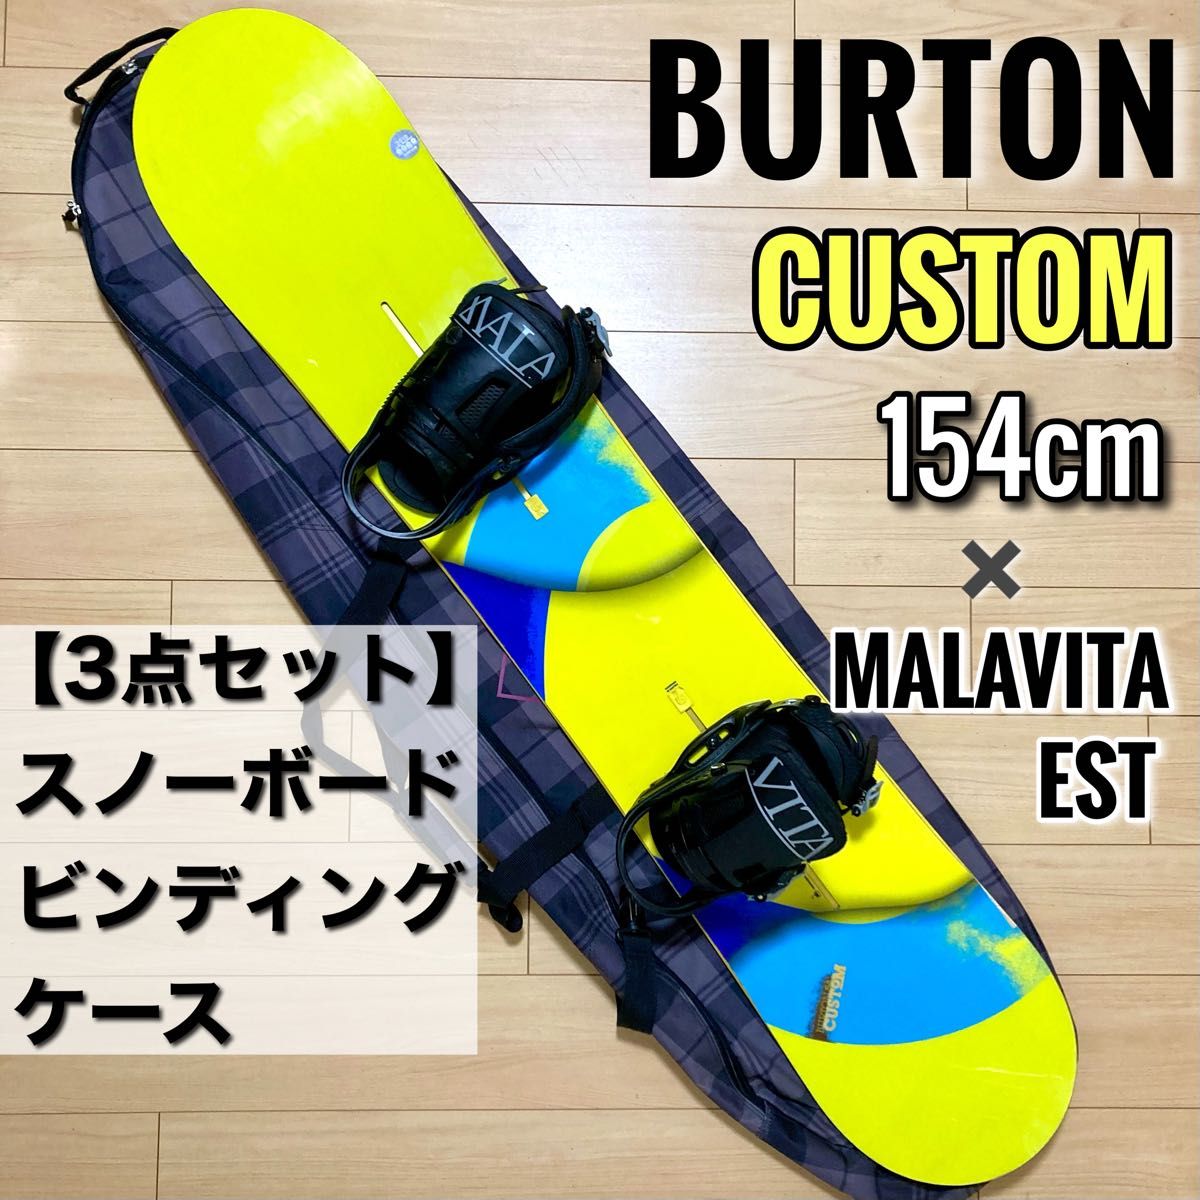 【BURTONセット】CUSTOM 154cm / MALAVITA EST ＋ケース付き バートン カスタム マラビータ